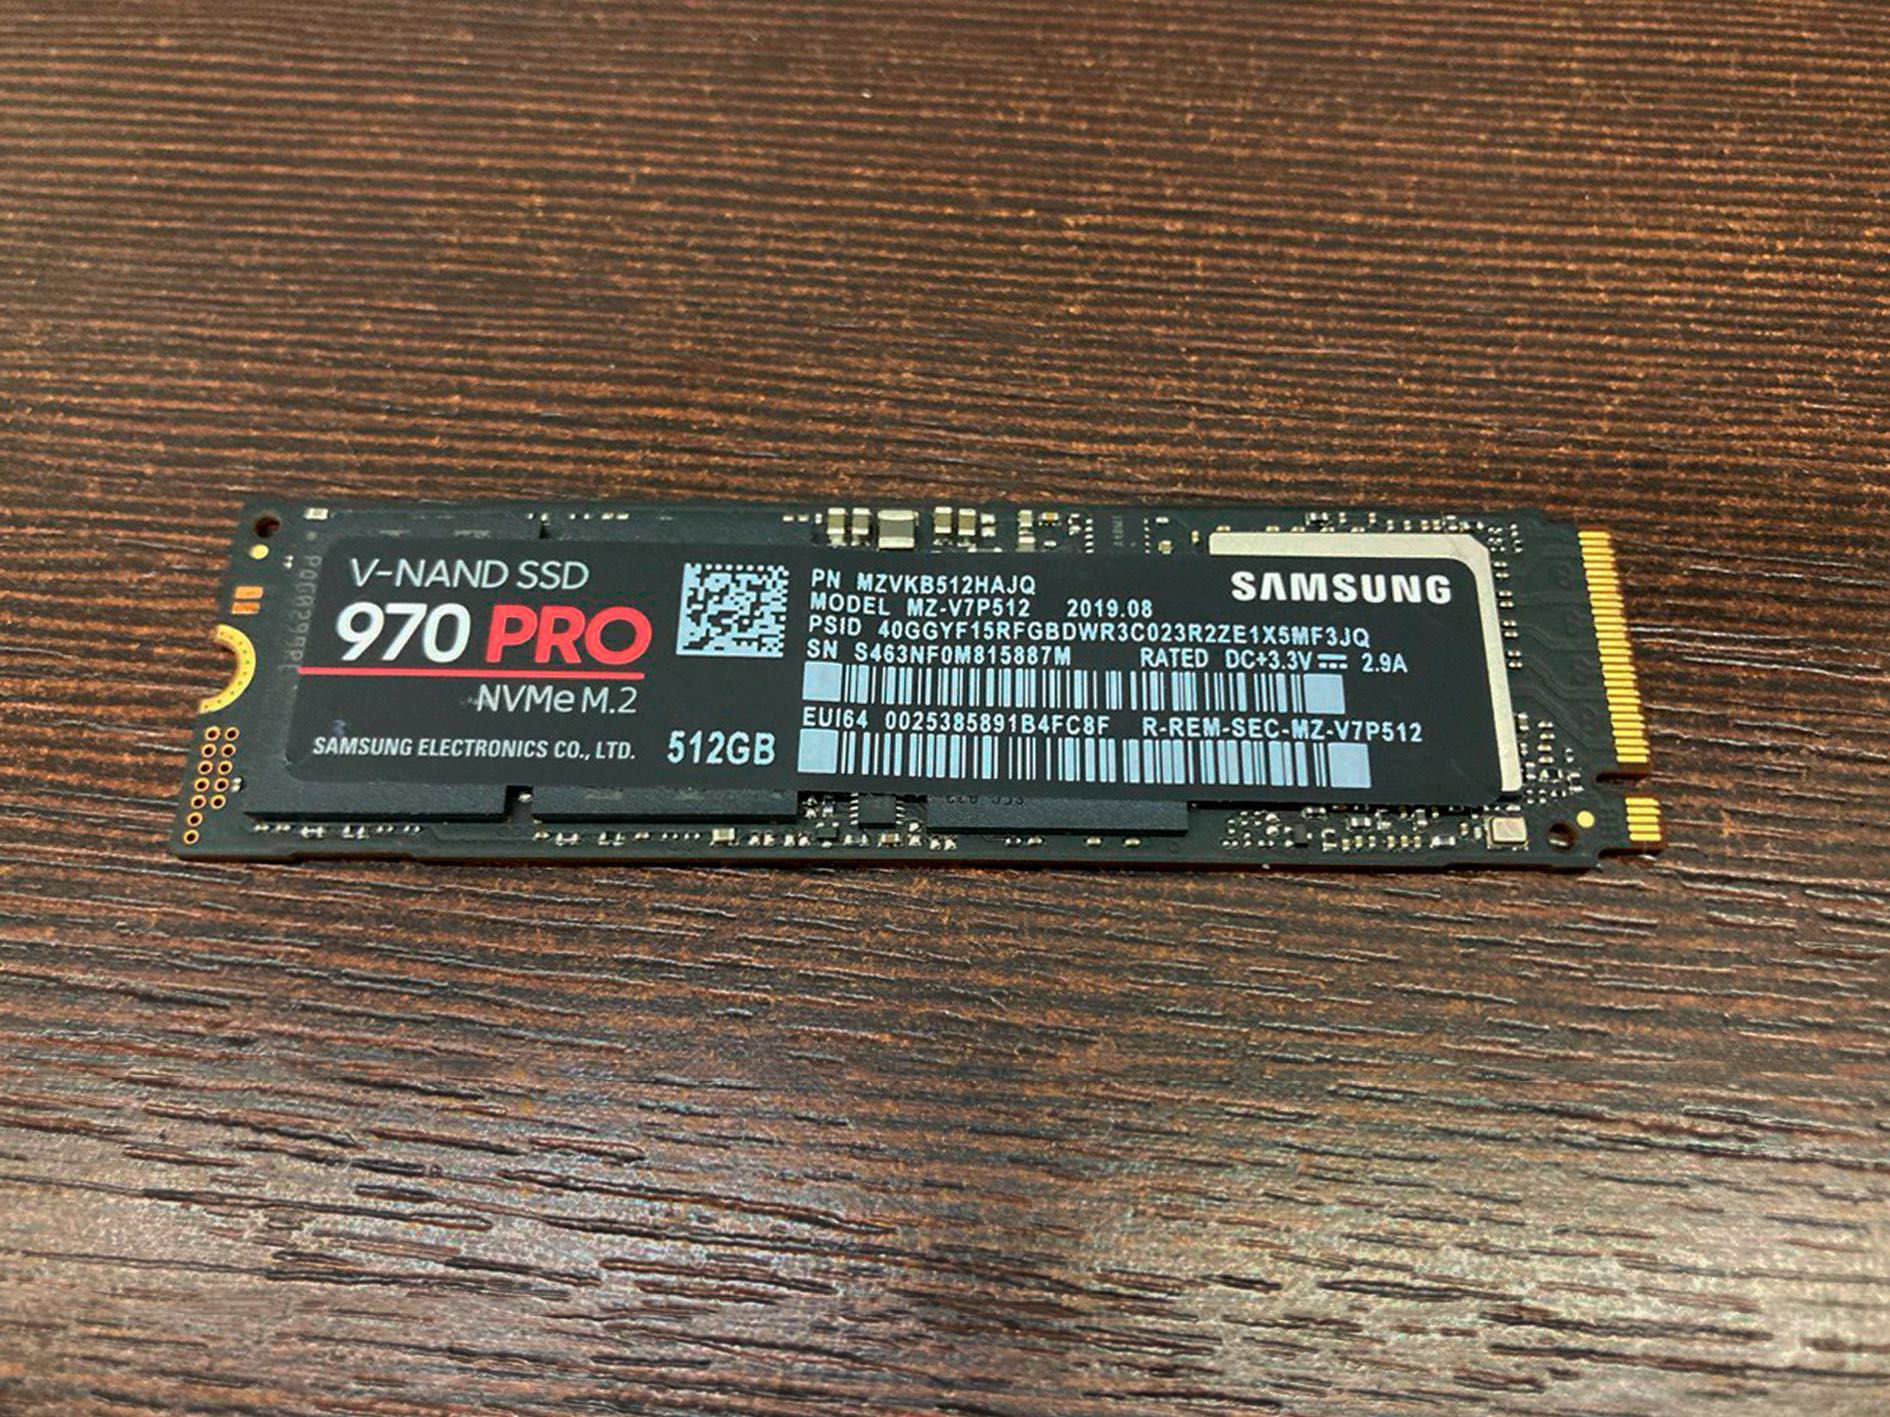 Samsung SSD 970 pro